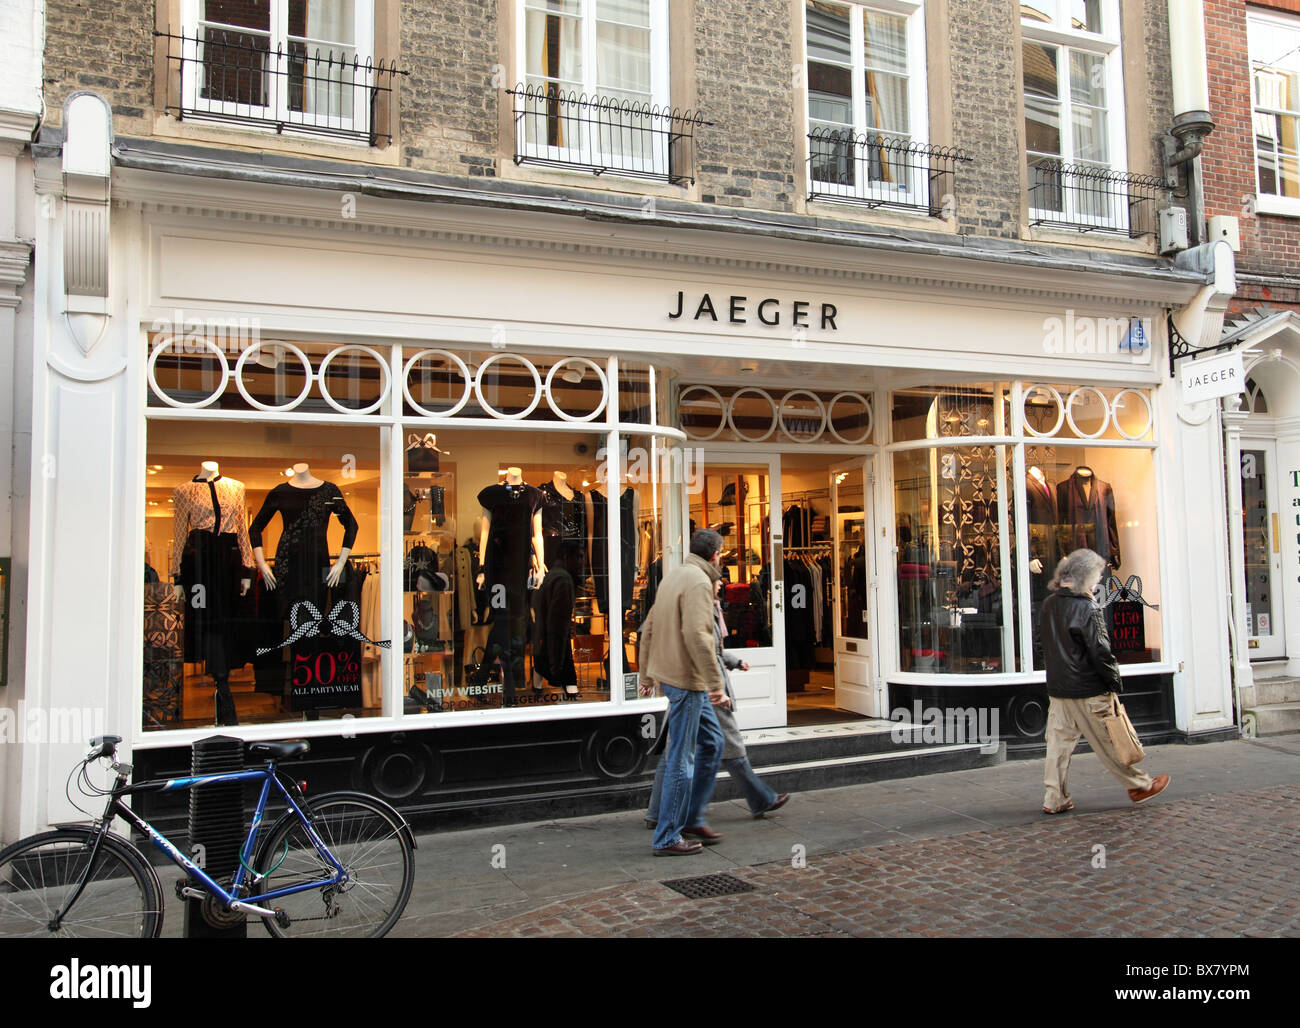 A Jaeger store in Cambridge, England, U.K Stock Photo - Alamy